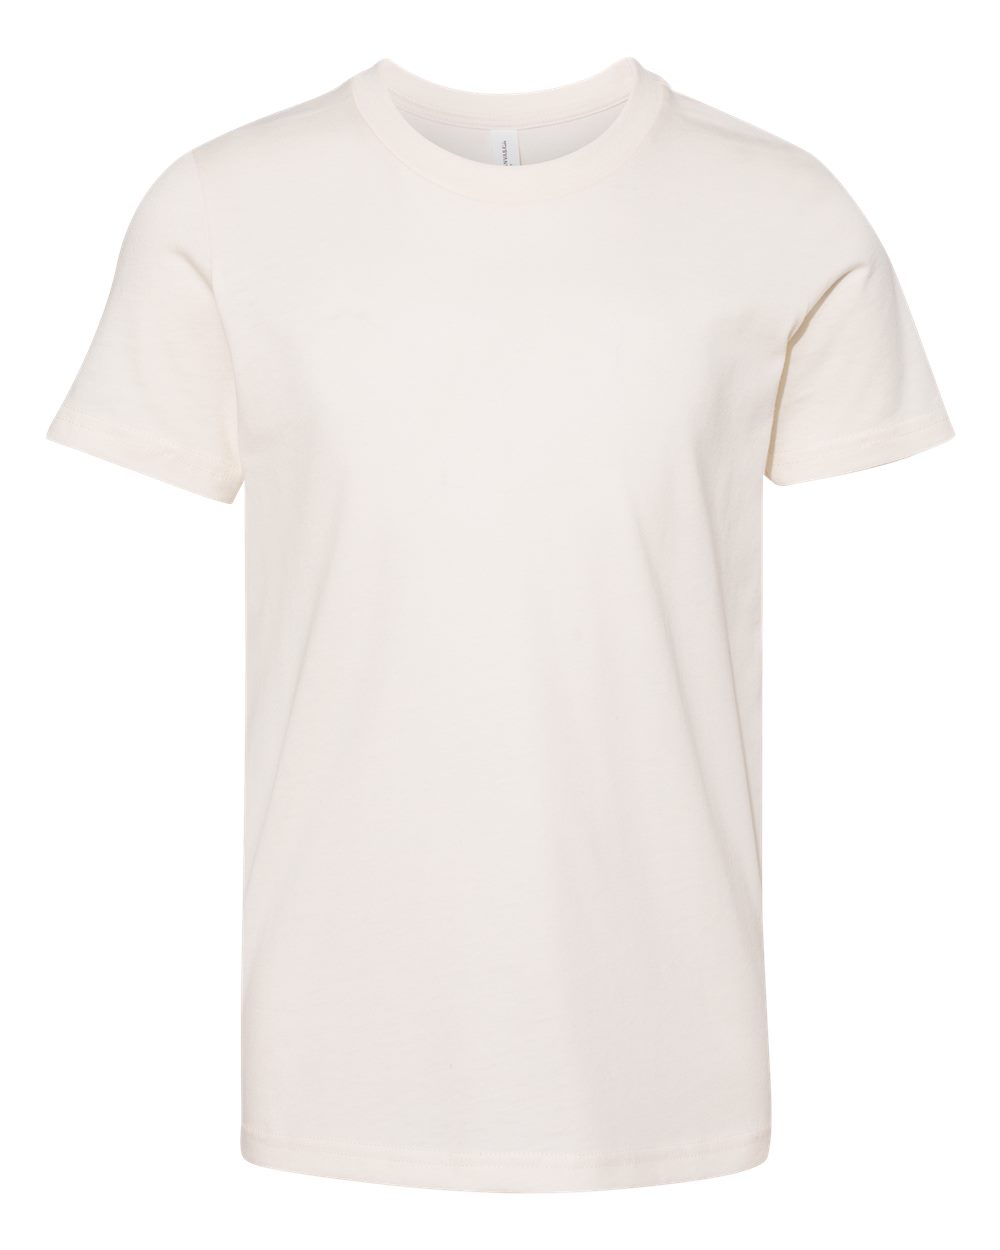 Oversized Shirt, Blank Tshirt, Plain Unisex Shirt, Plain Bella Canvas Shirt